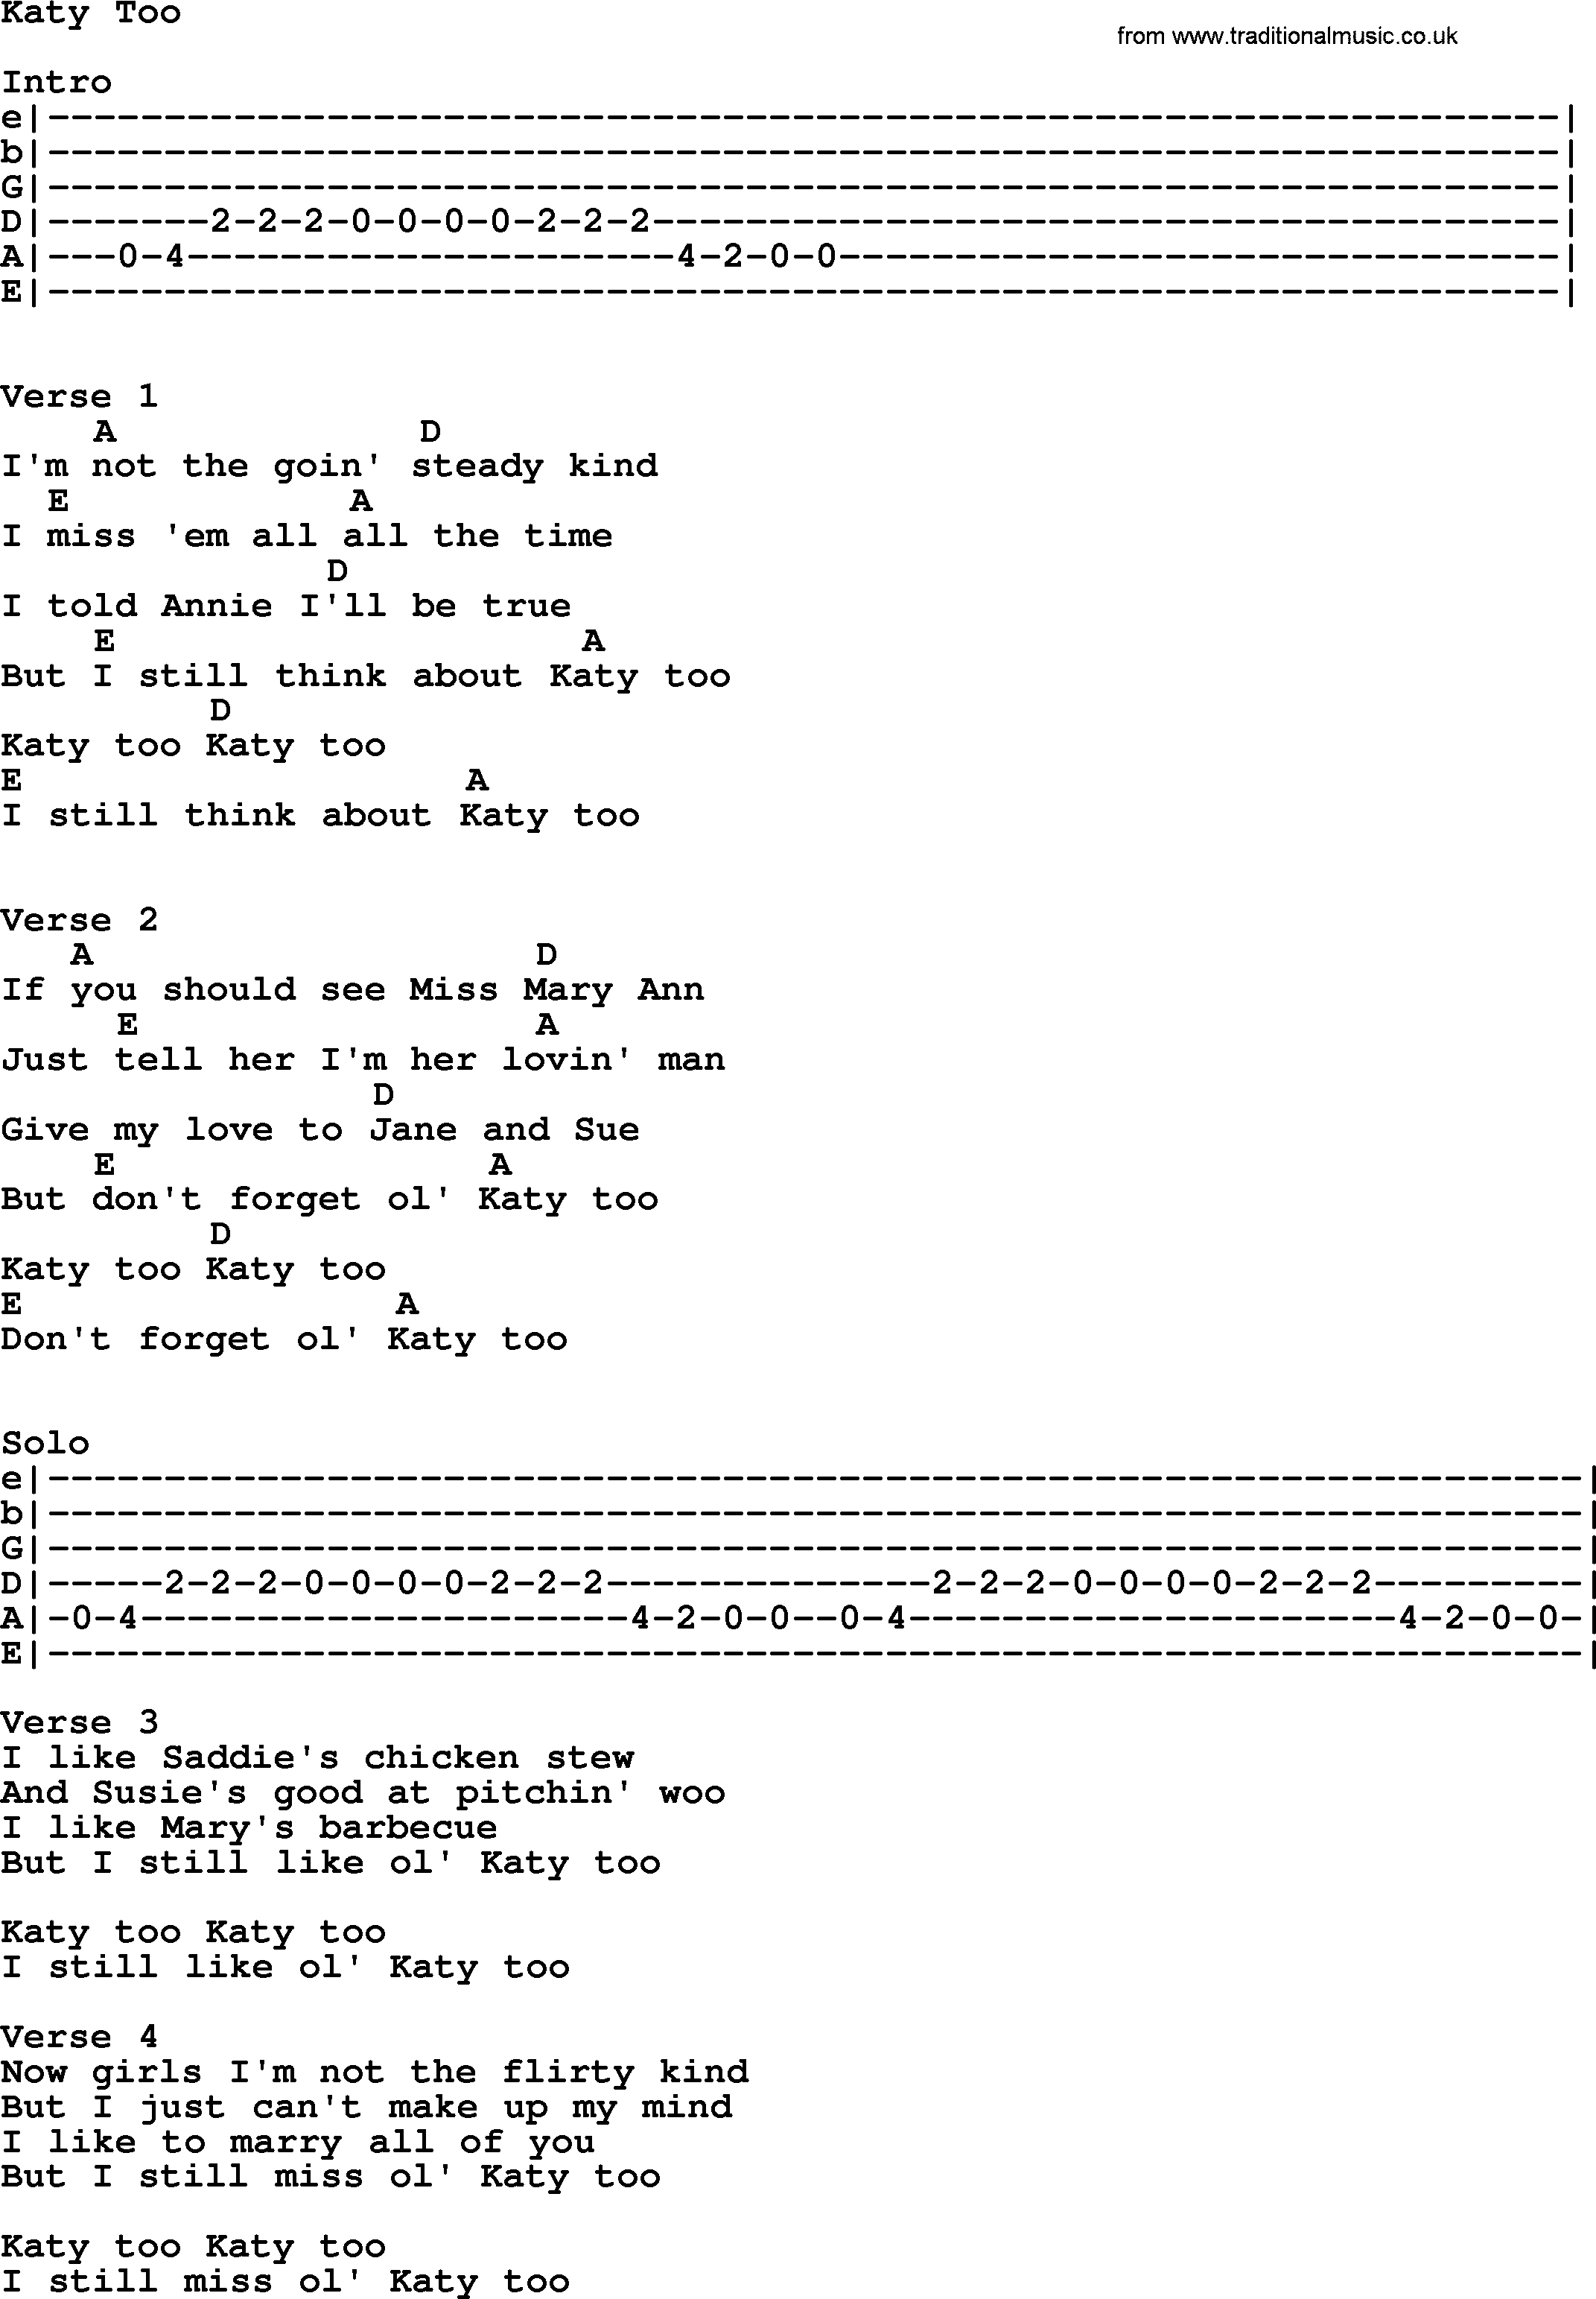 Johnny Cash song Katy Too, lyrics and chords